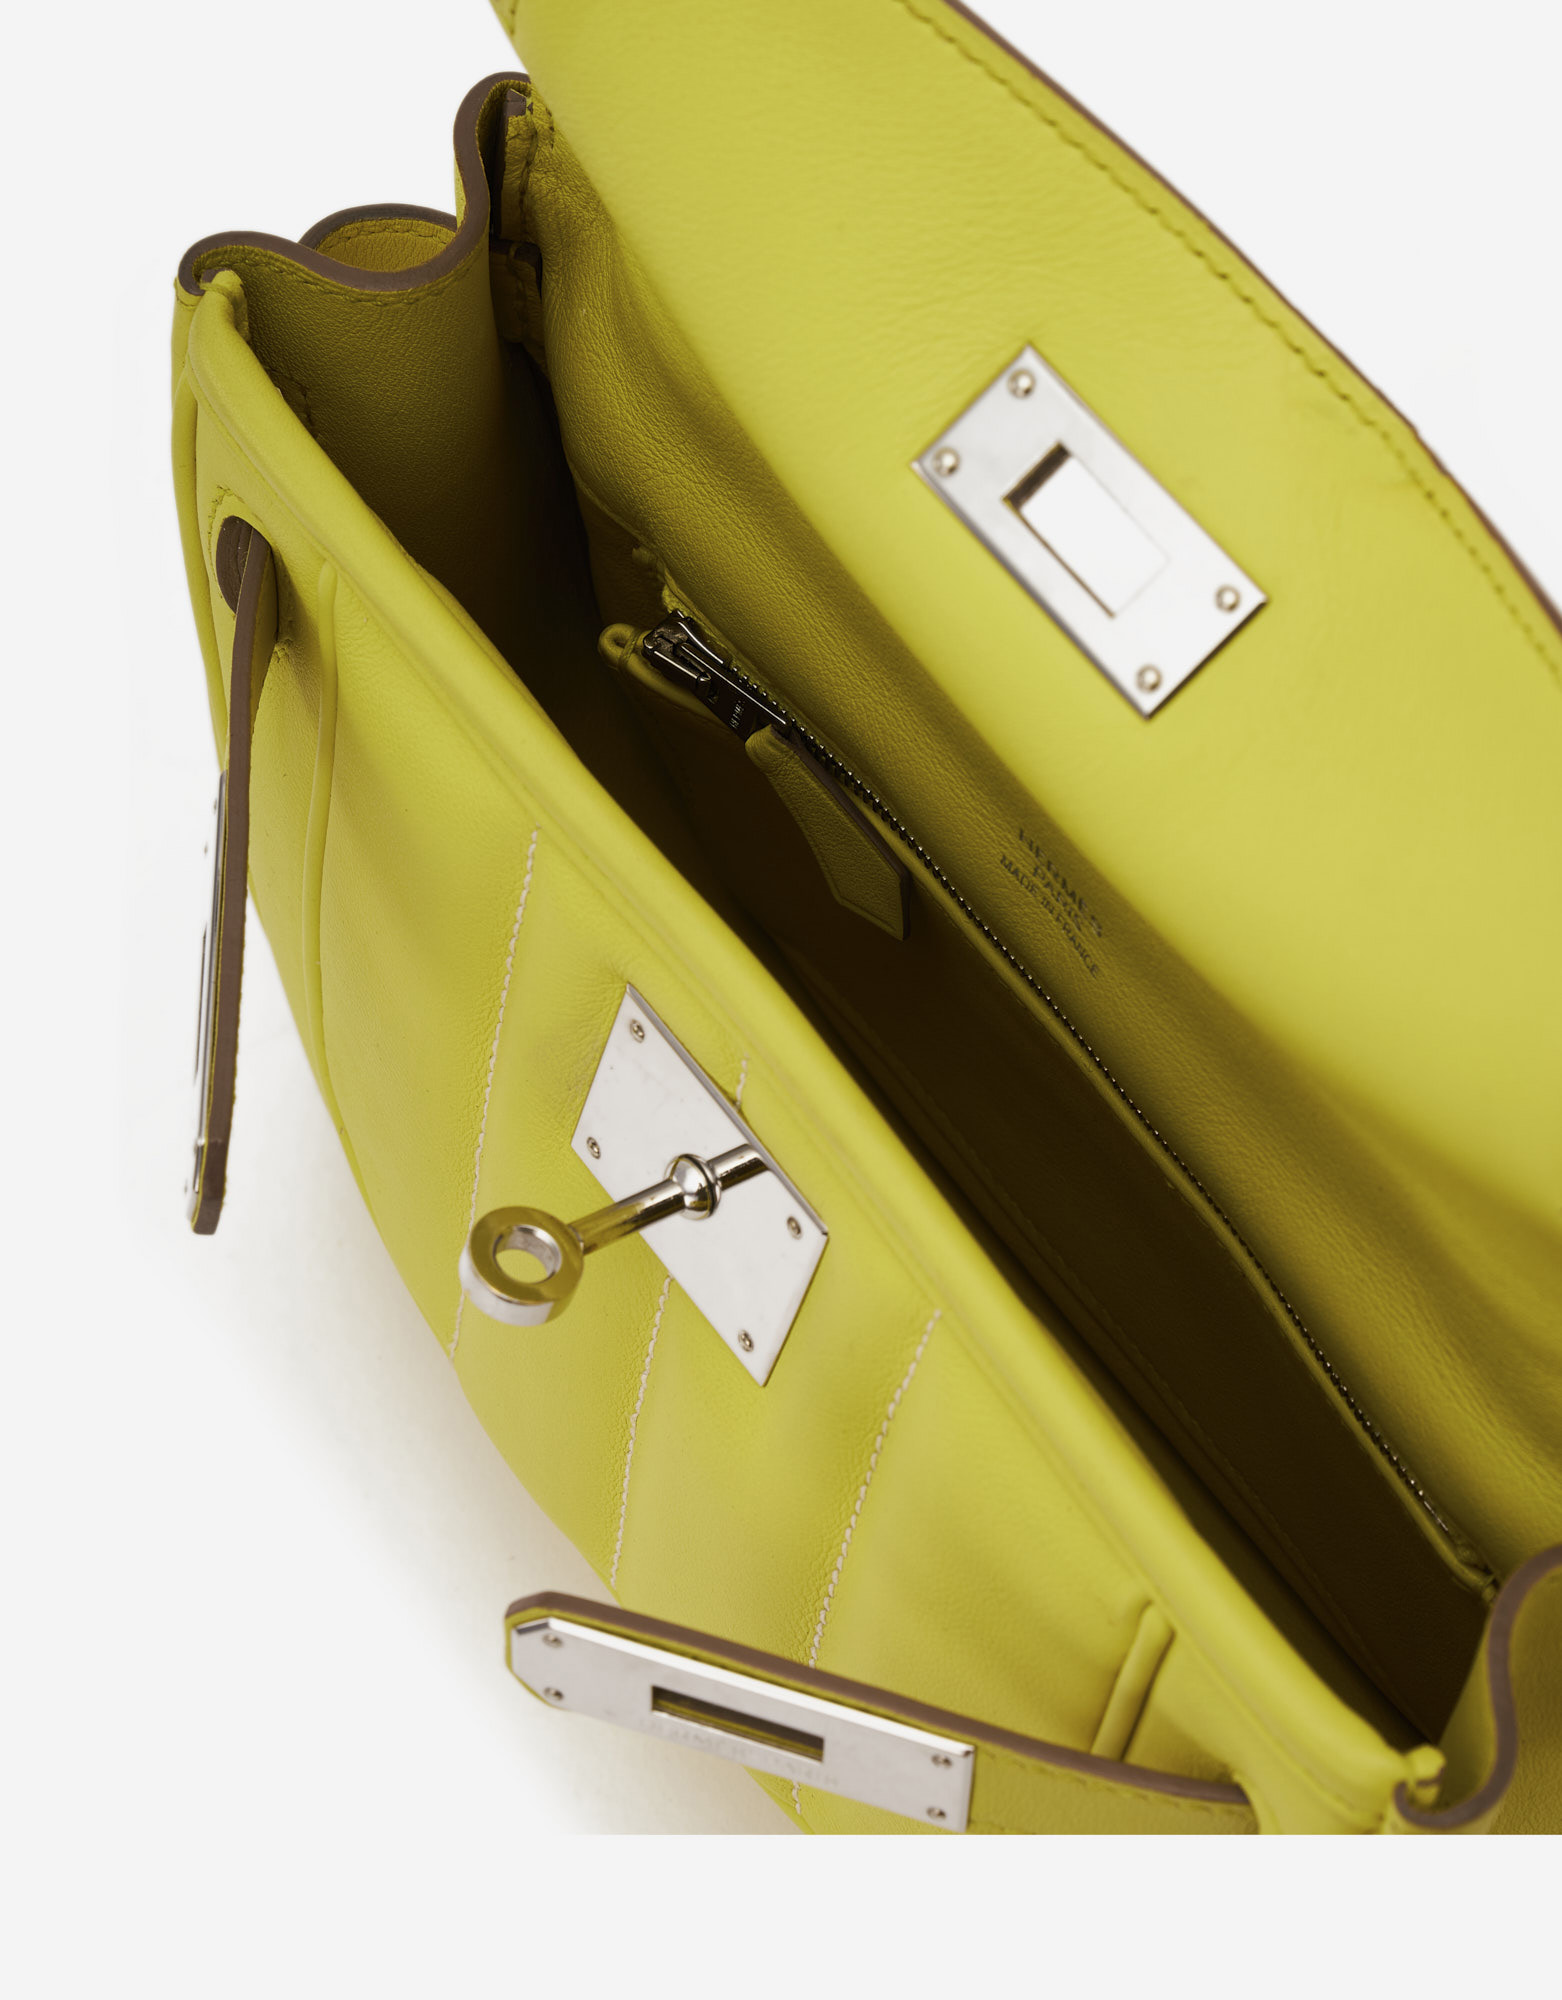 Hermès Swift Mini Berline 21 - Orange Crossbody Bags, Handbags - HER233942